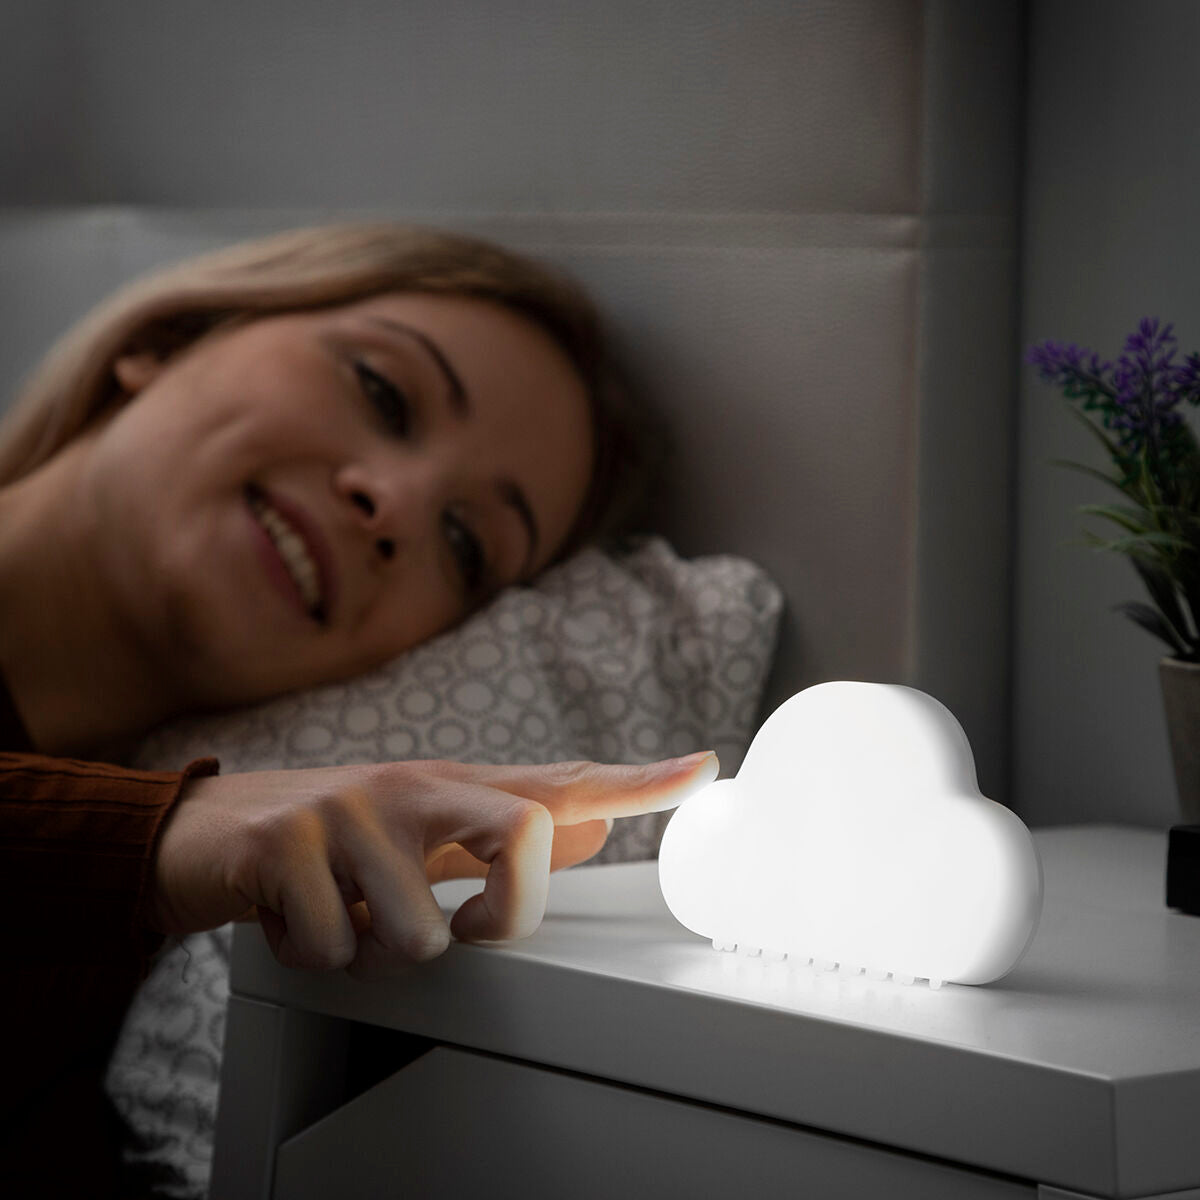 Kaufe Tragbare intelligente LED-Lampe Clominy InnovaGoods bei AWK Flagship um € 27.00